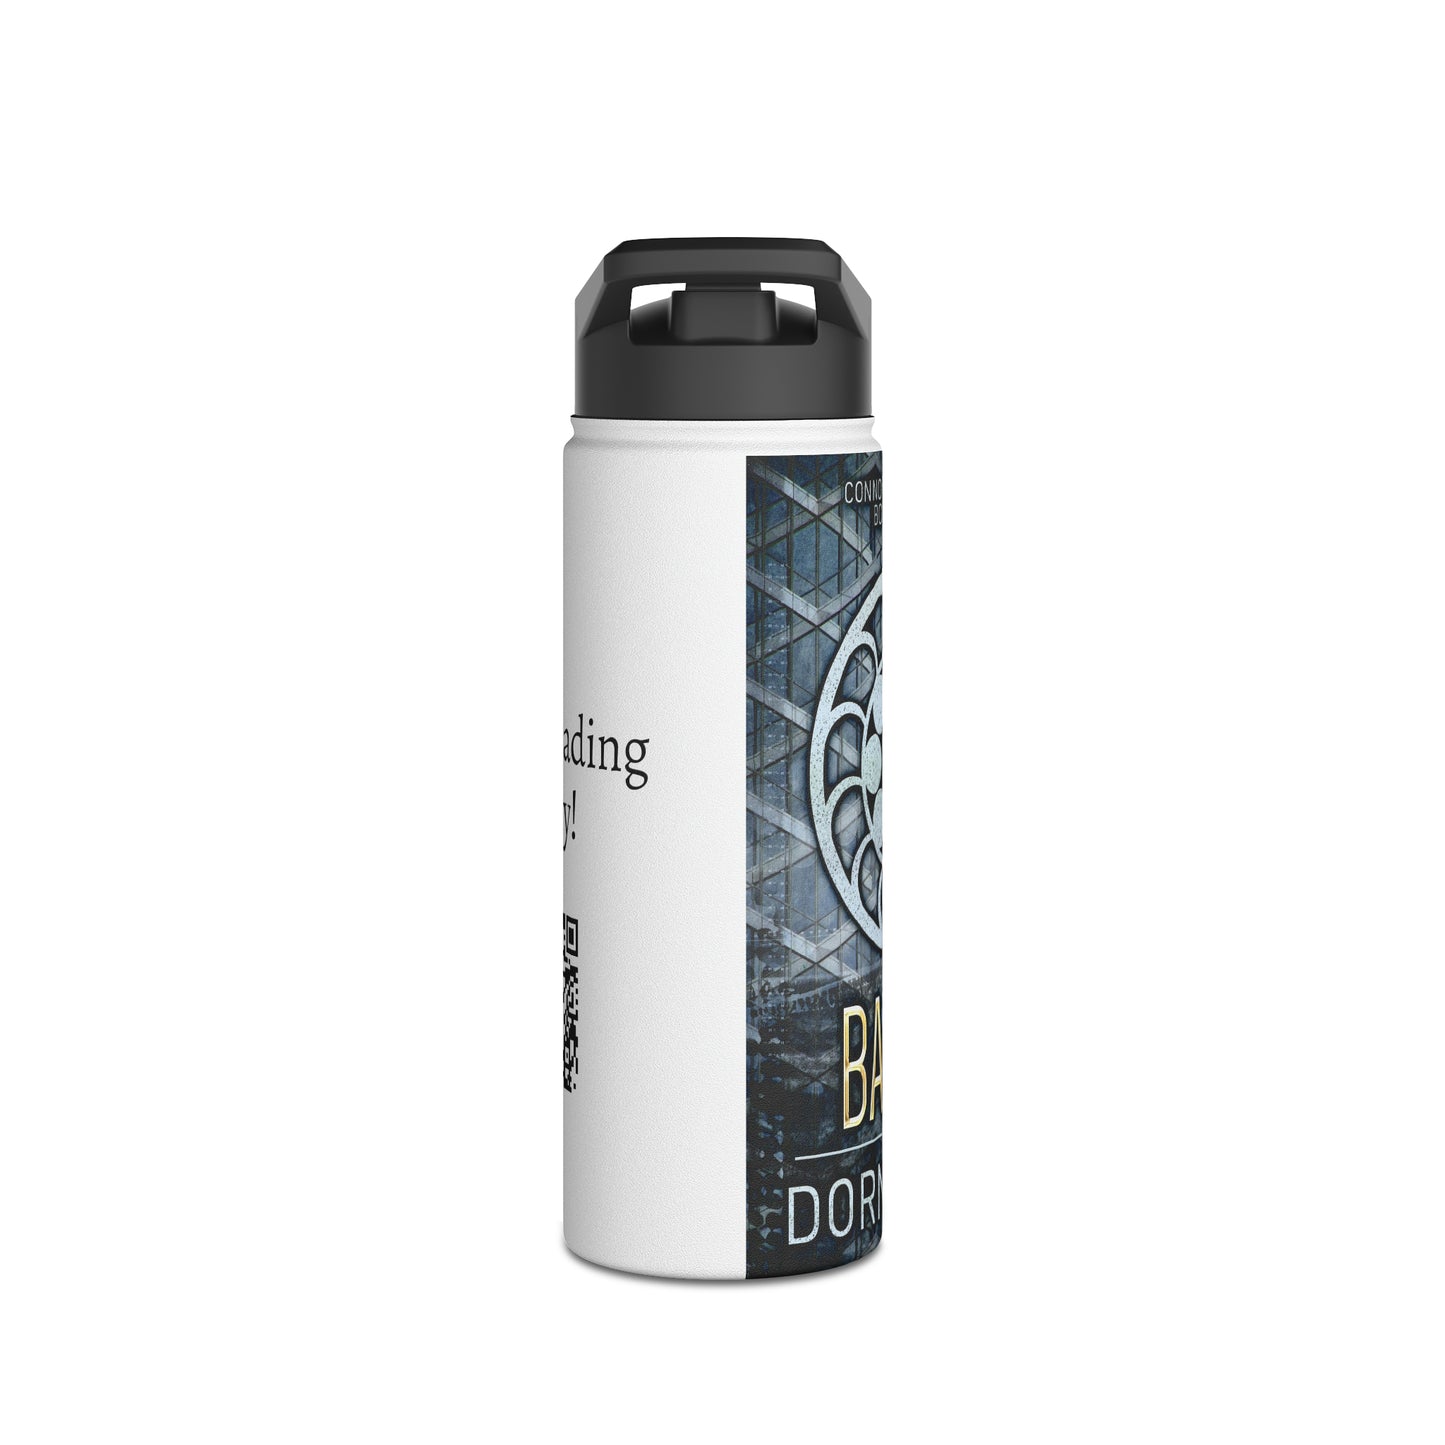 The Battle - Stainless Steel Water Bottle